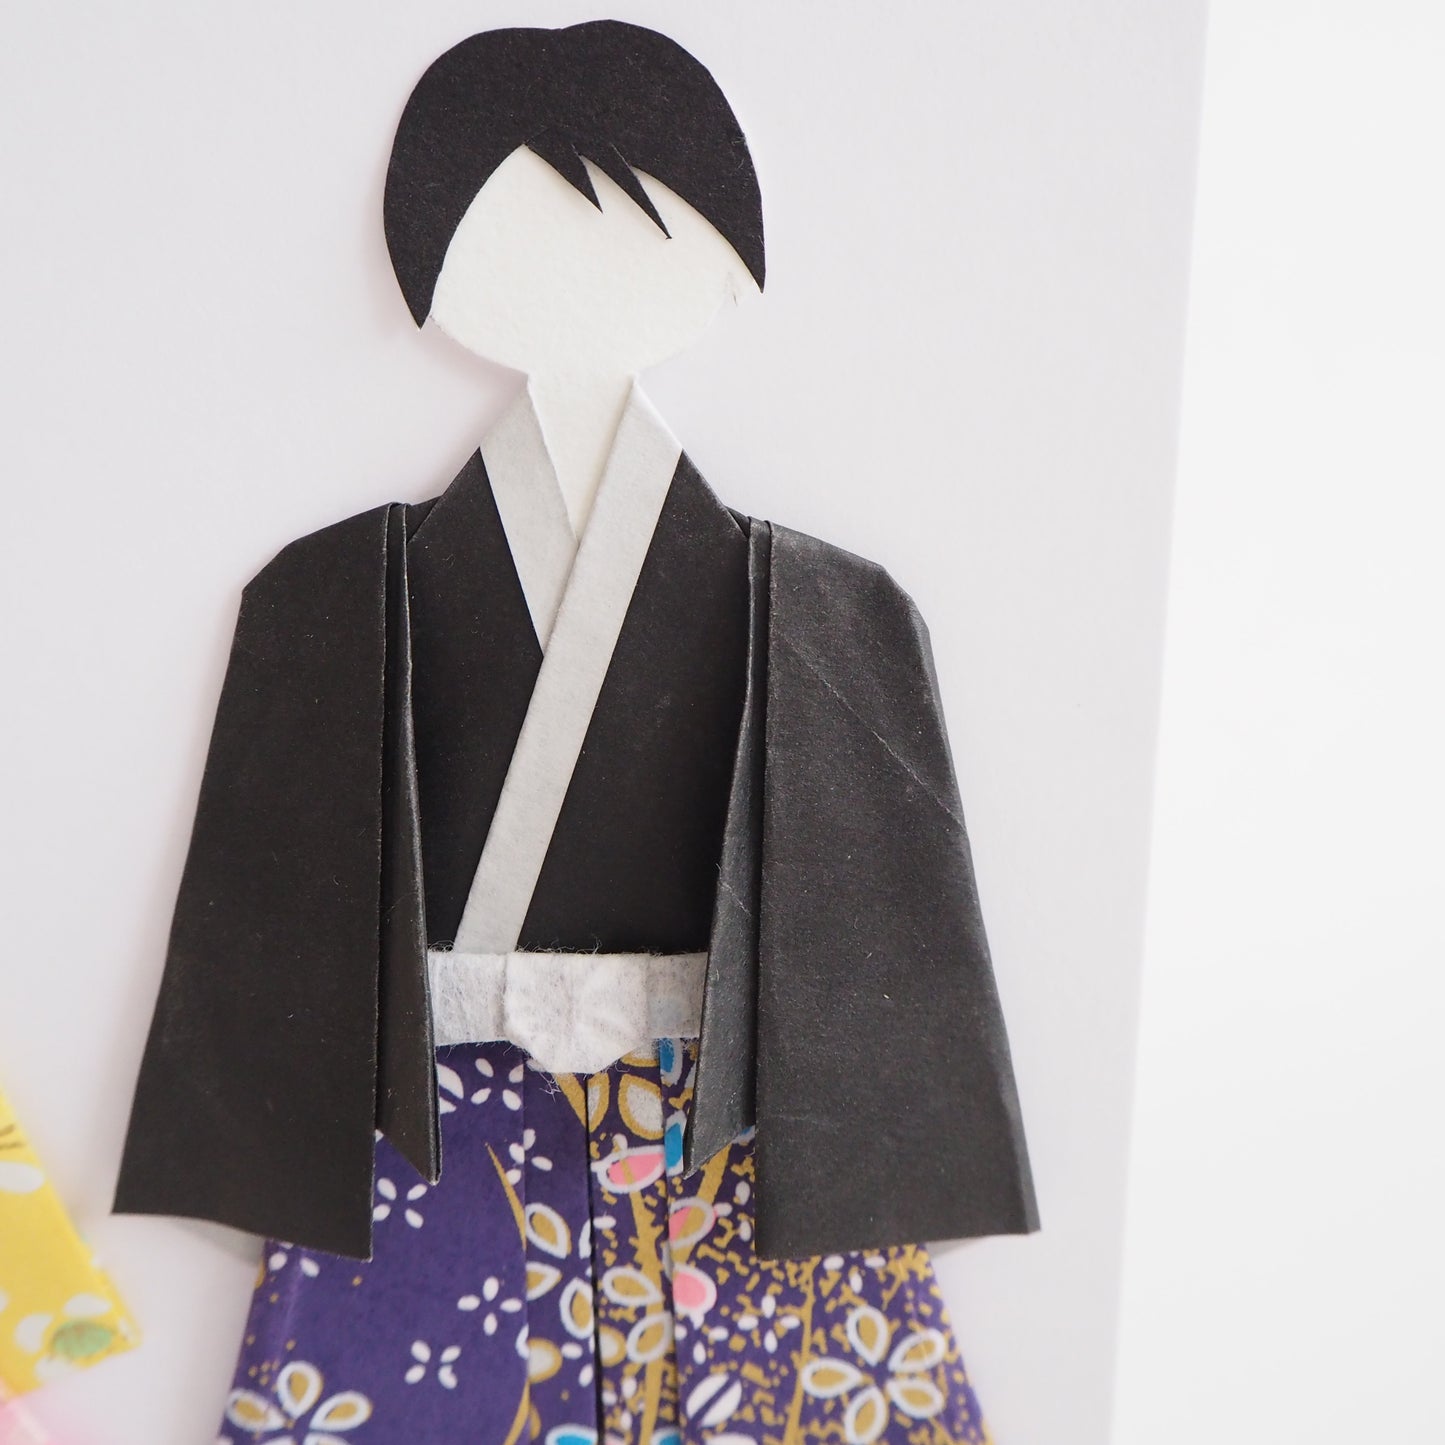 Customisable Handmade Origami Wedding Card - Floral Romance